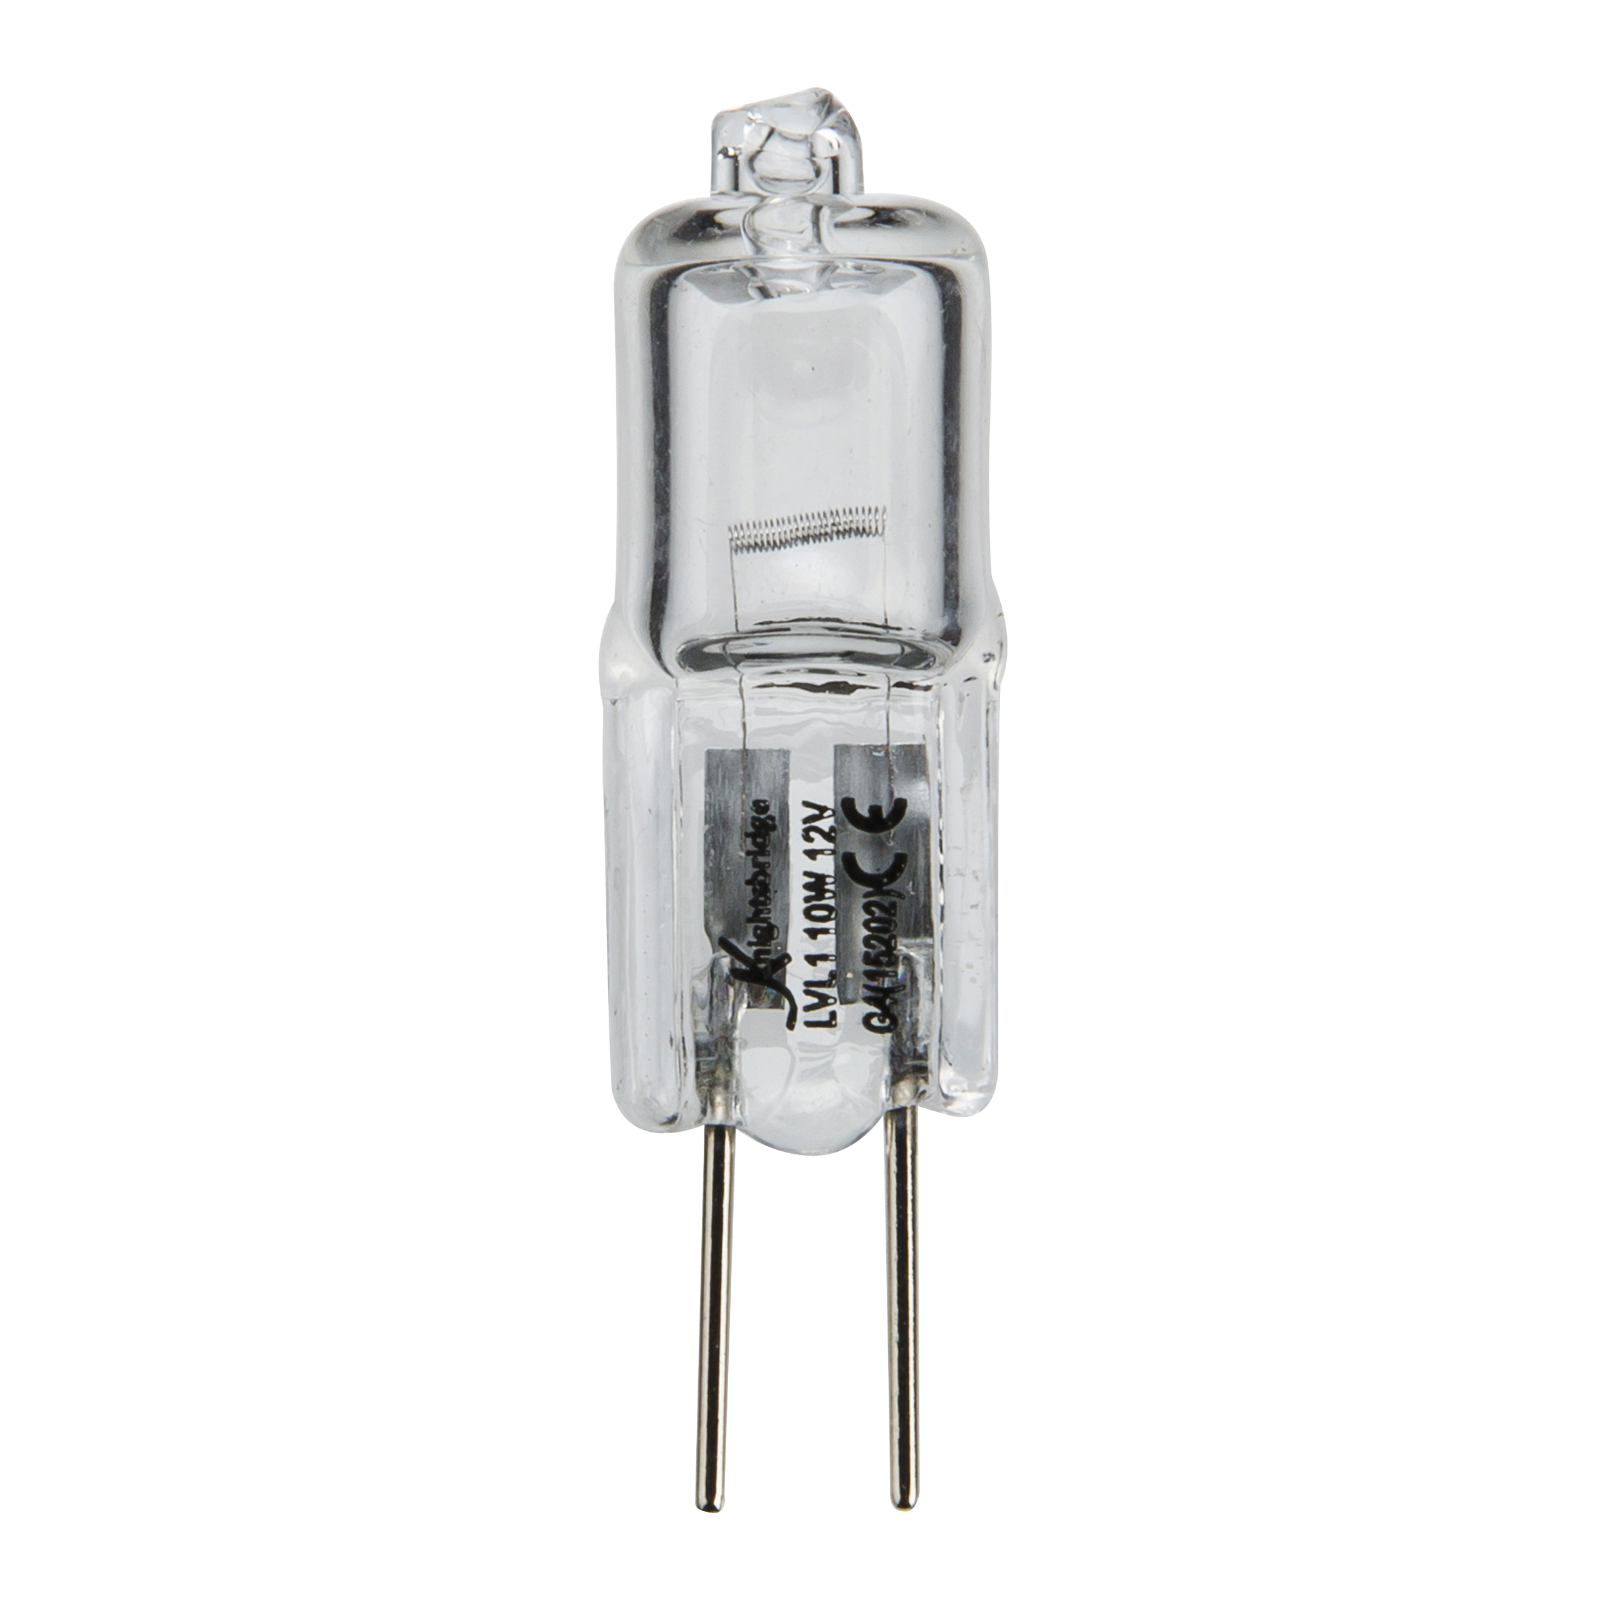 12V G4 10W Low Voltage Halogen Capsule Lamp Warm White 3000K - LVL1 